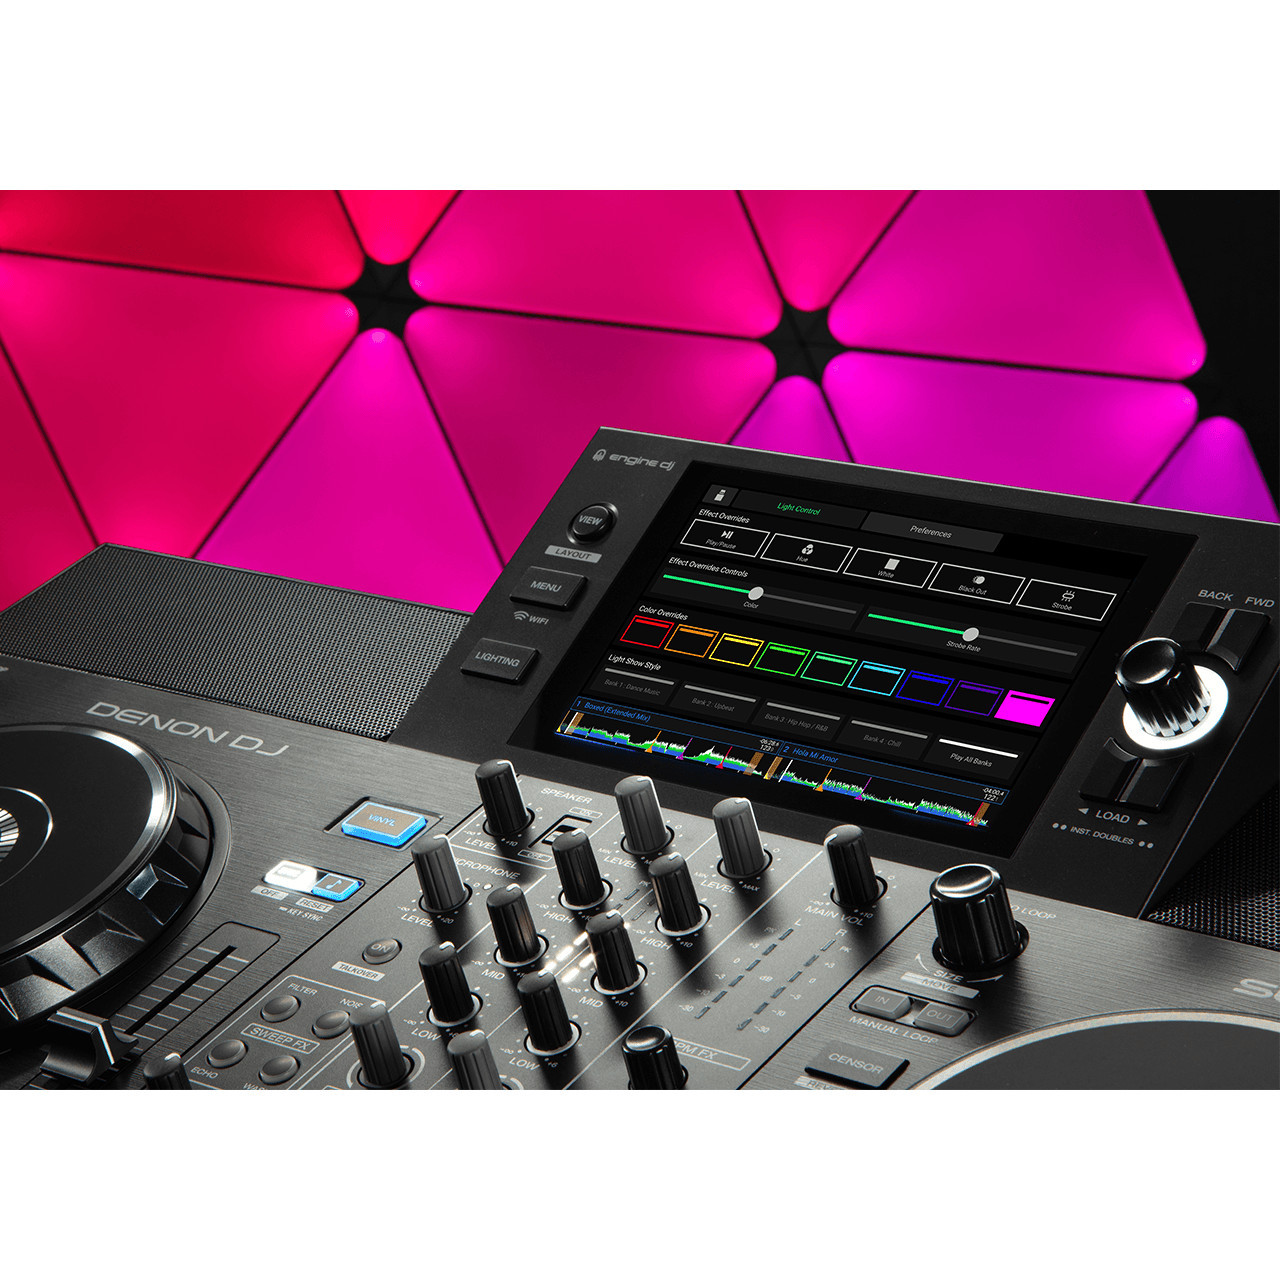 Denon DJ Prime 4+ 4-deck Standalone DJ System